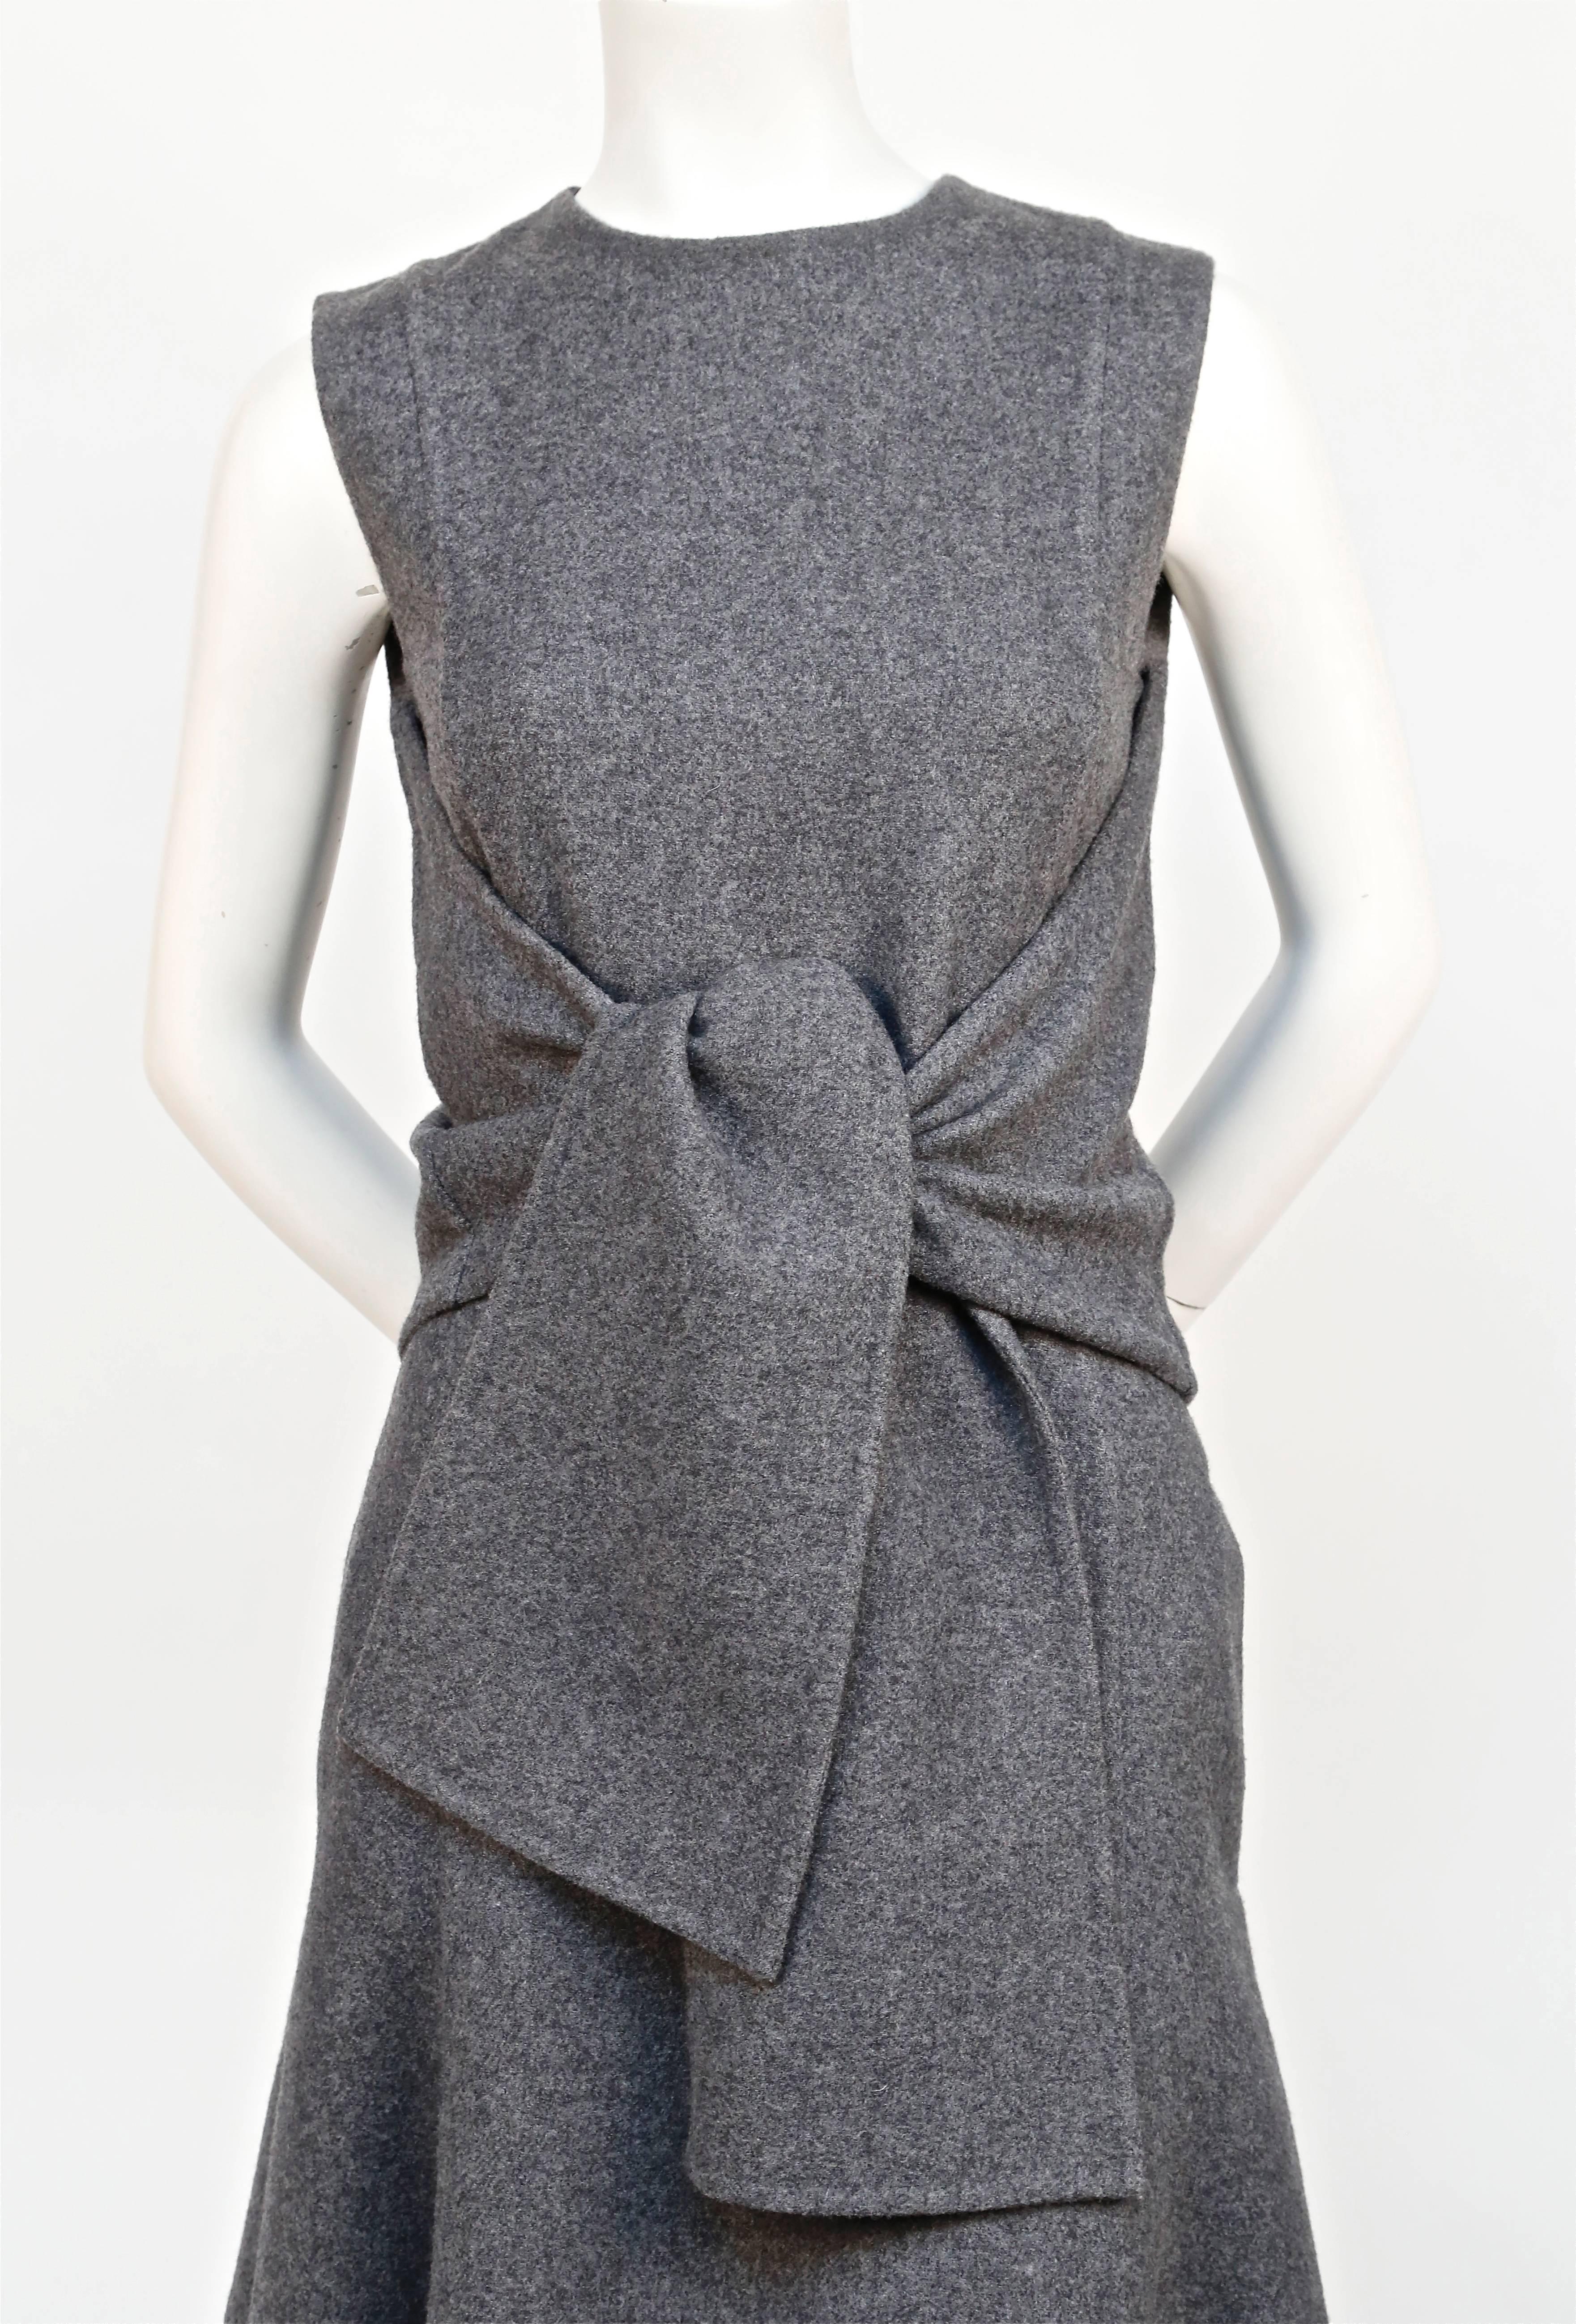 grey cashmere dress